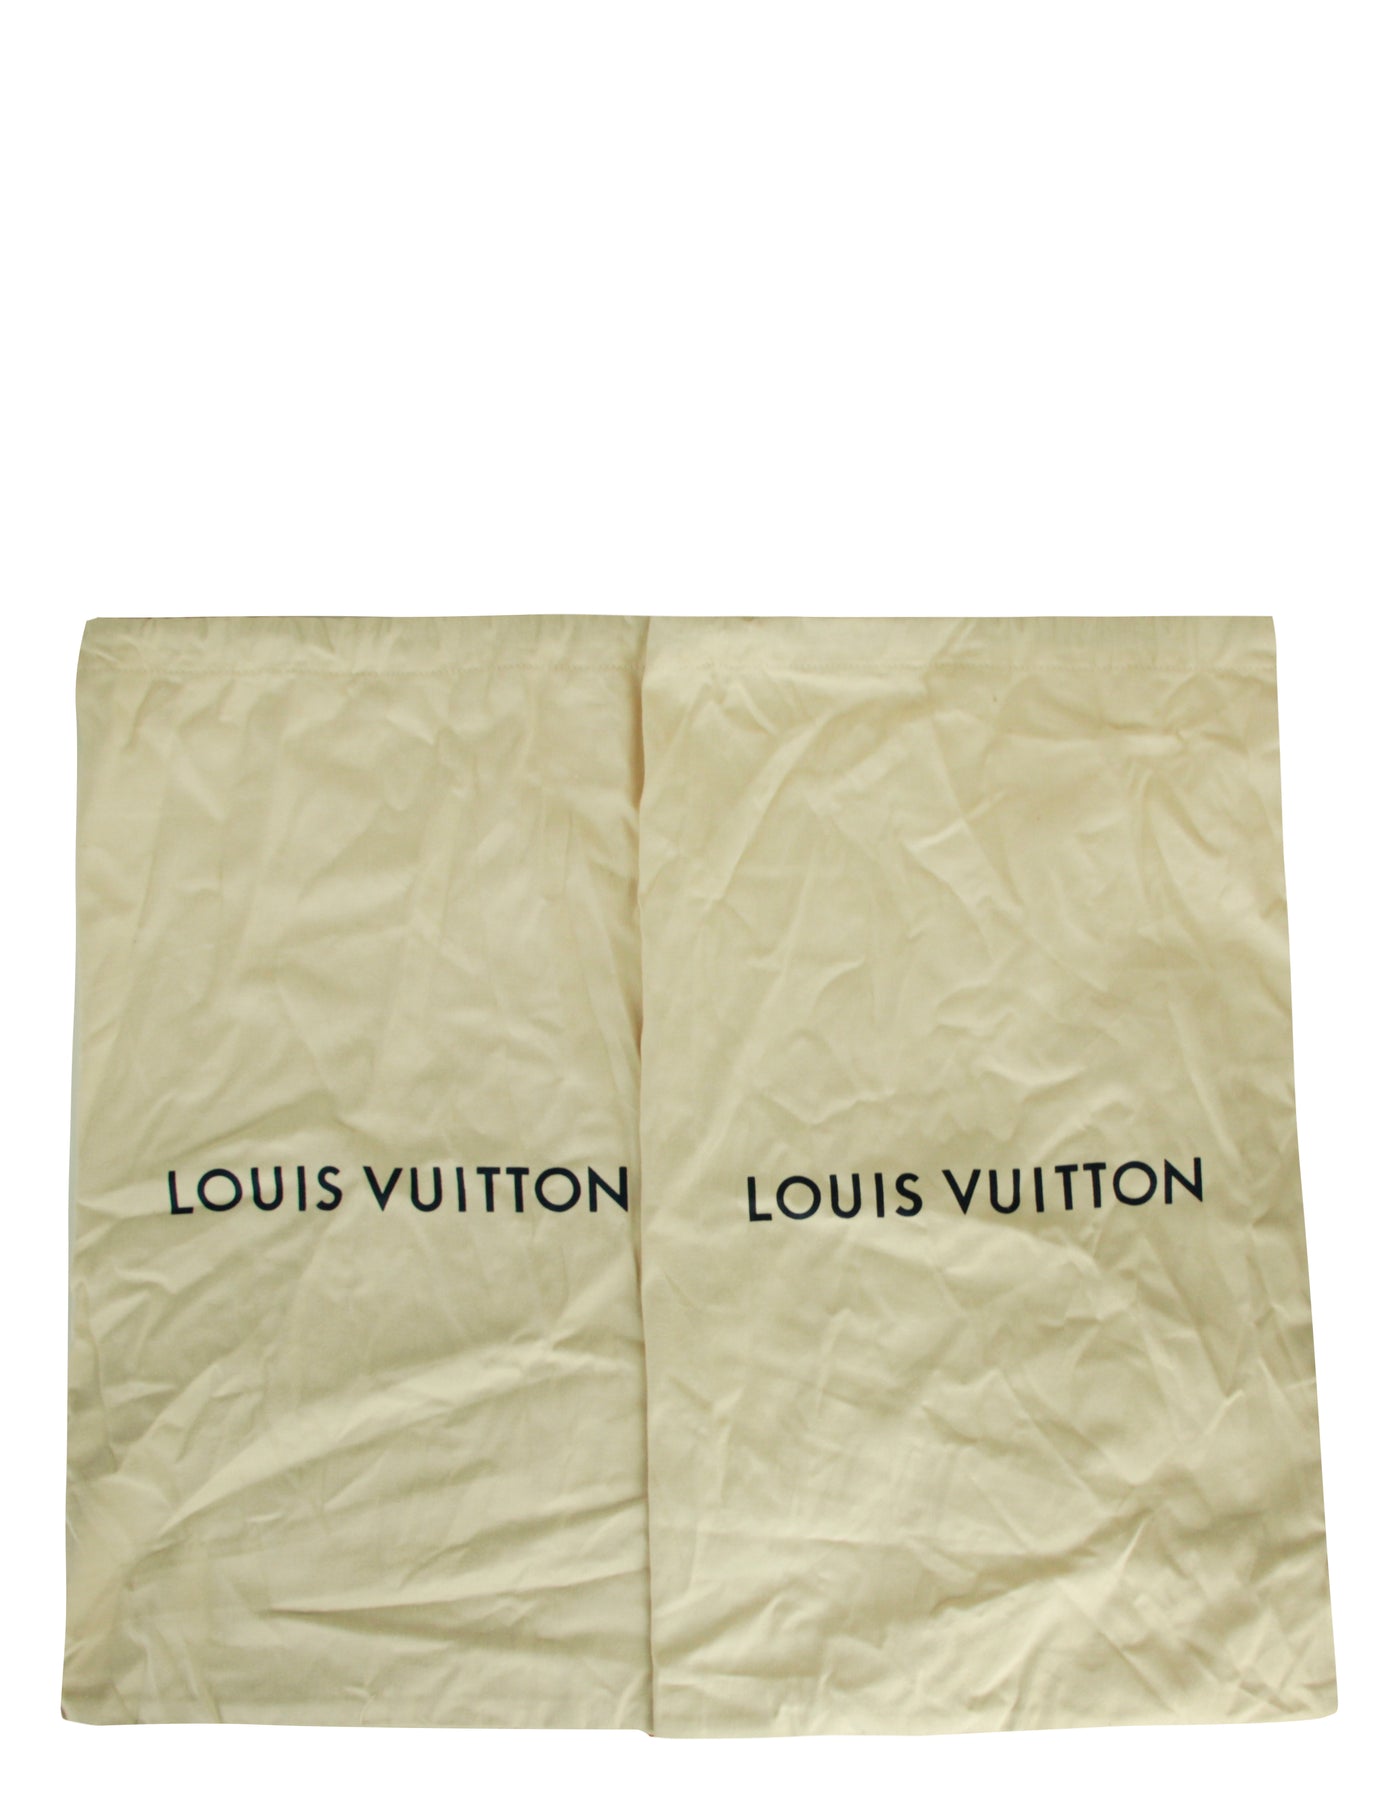 Louis Vuitton Snowdrop Boots Tan Black Size 37.5 New Authentic RARE!!